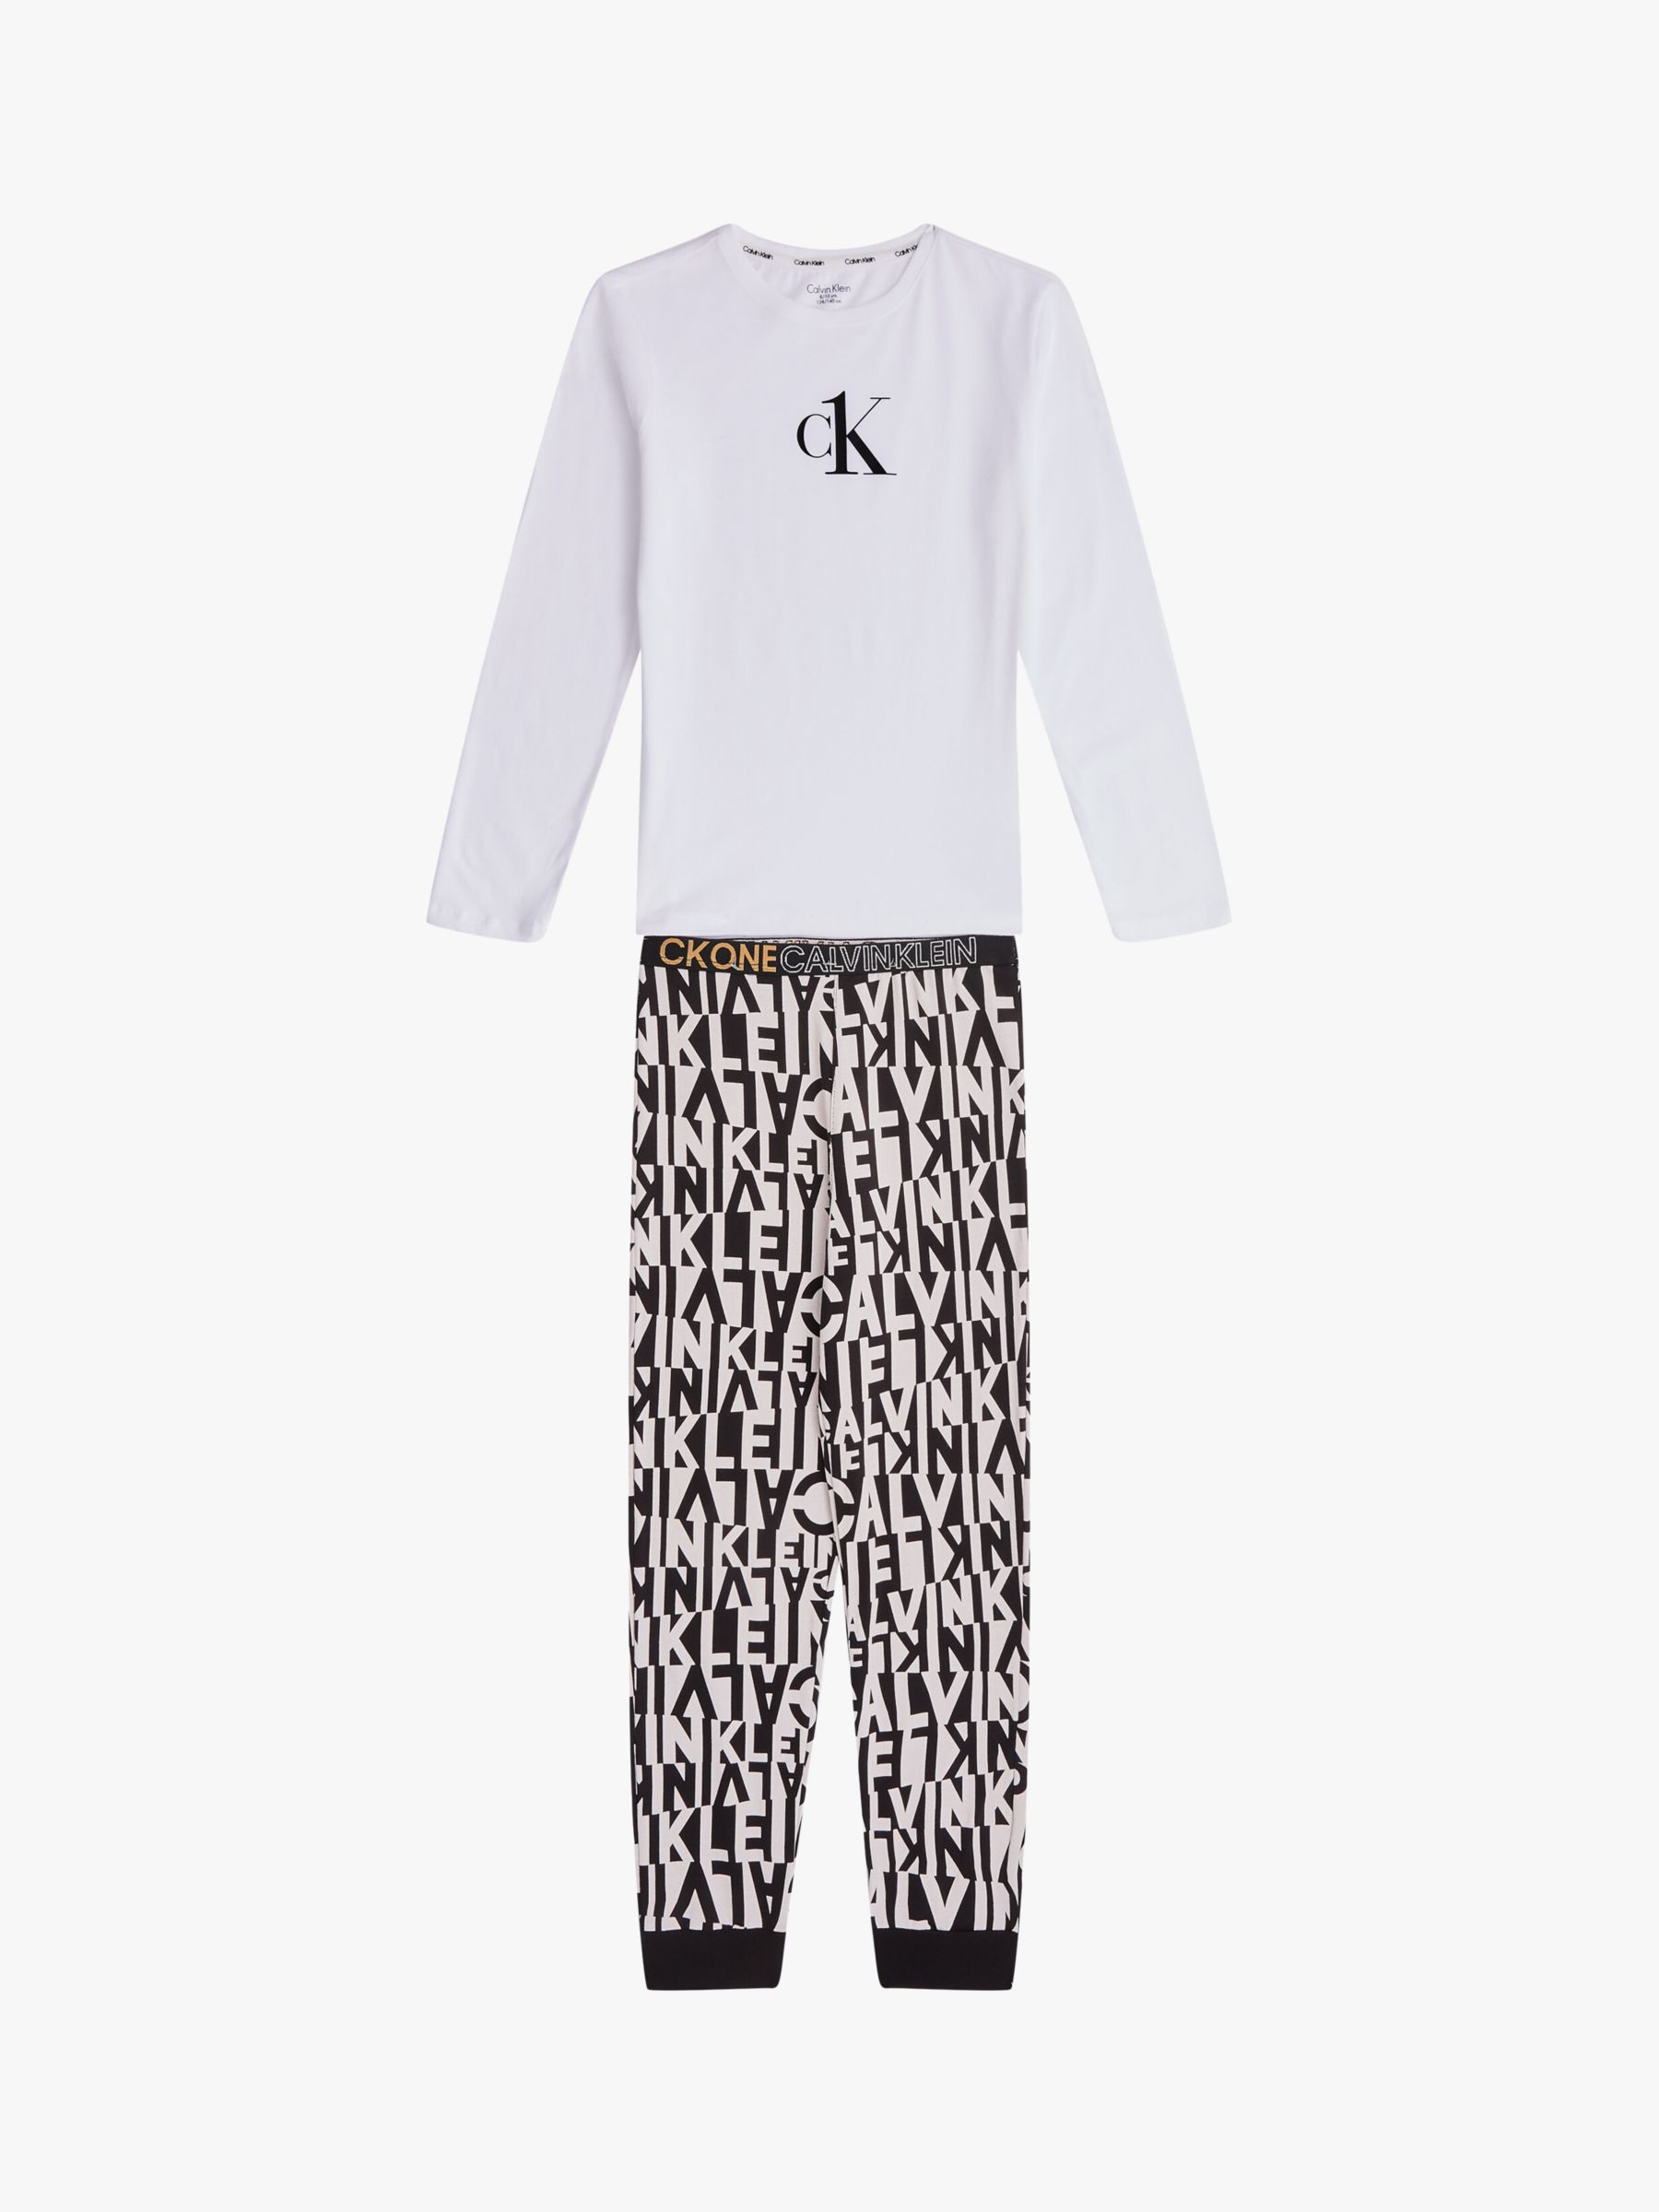 Calvin Klein Kids' Organic Cotton CK One Pyjama Set, Multi